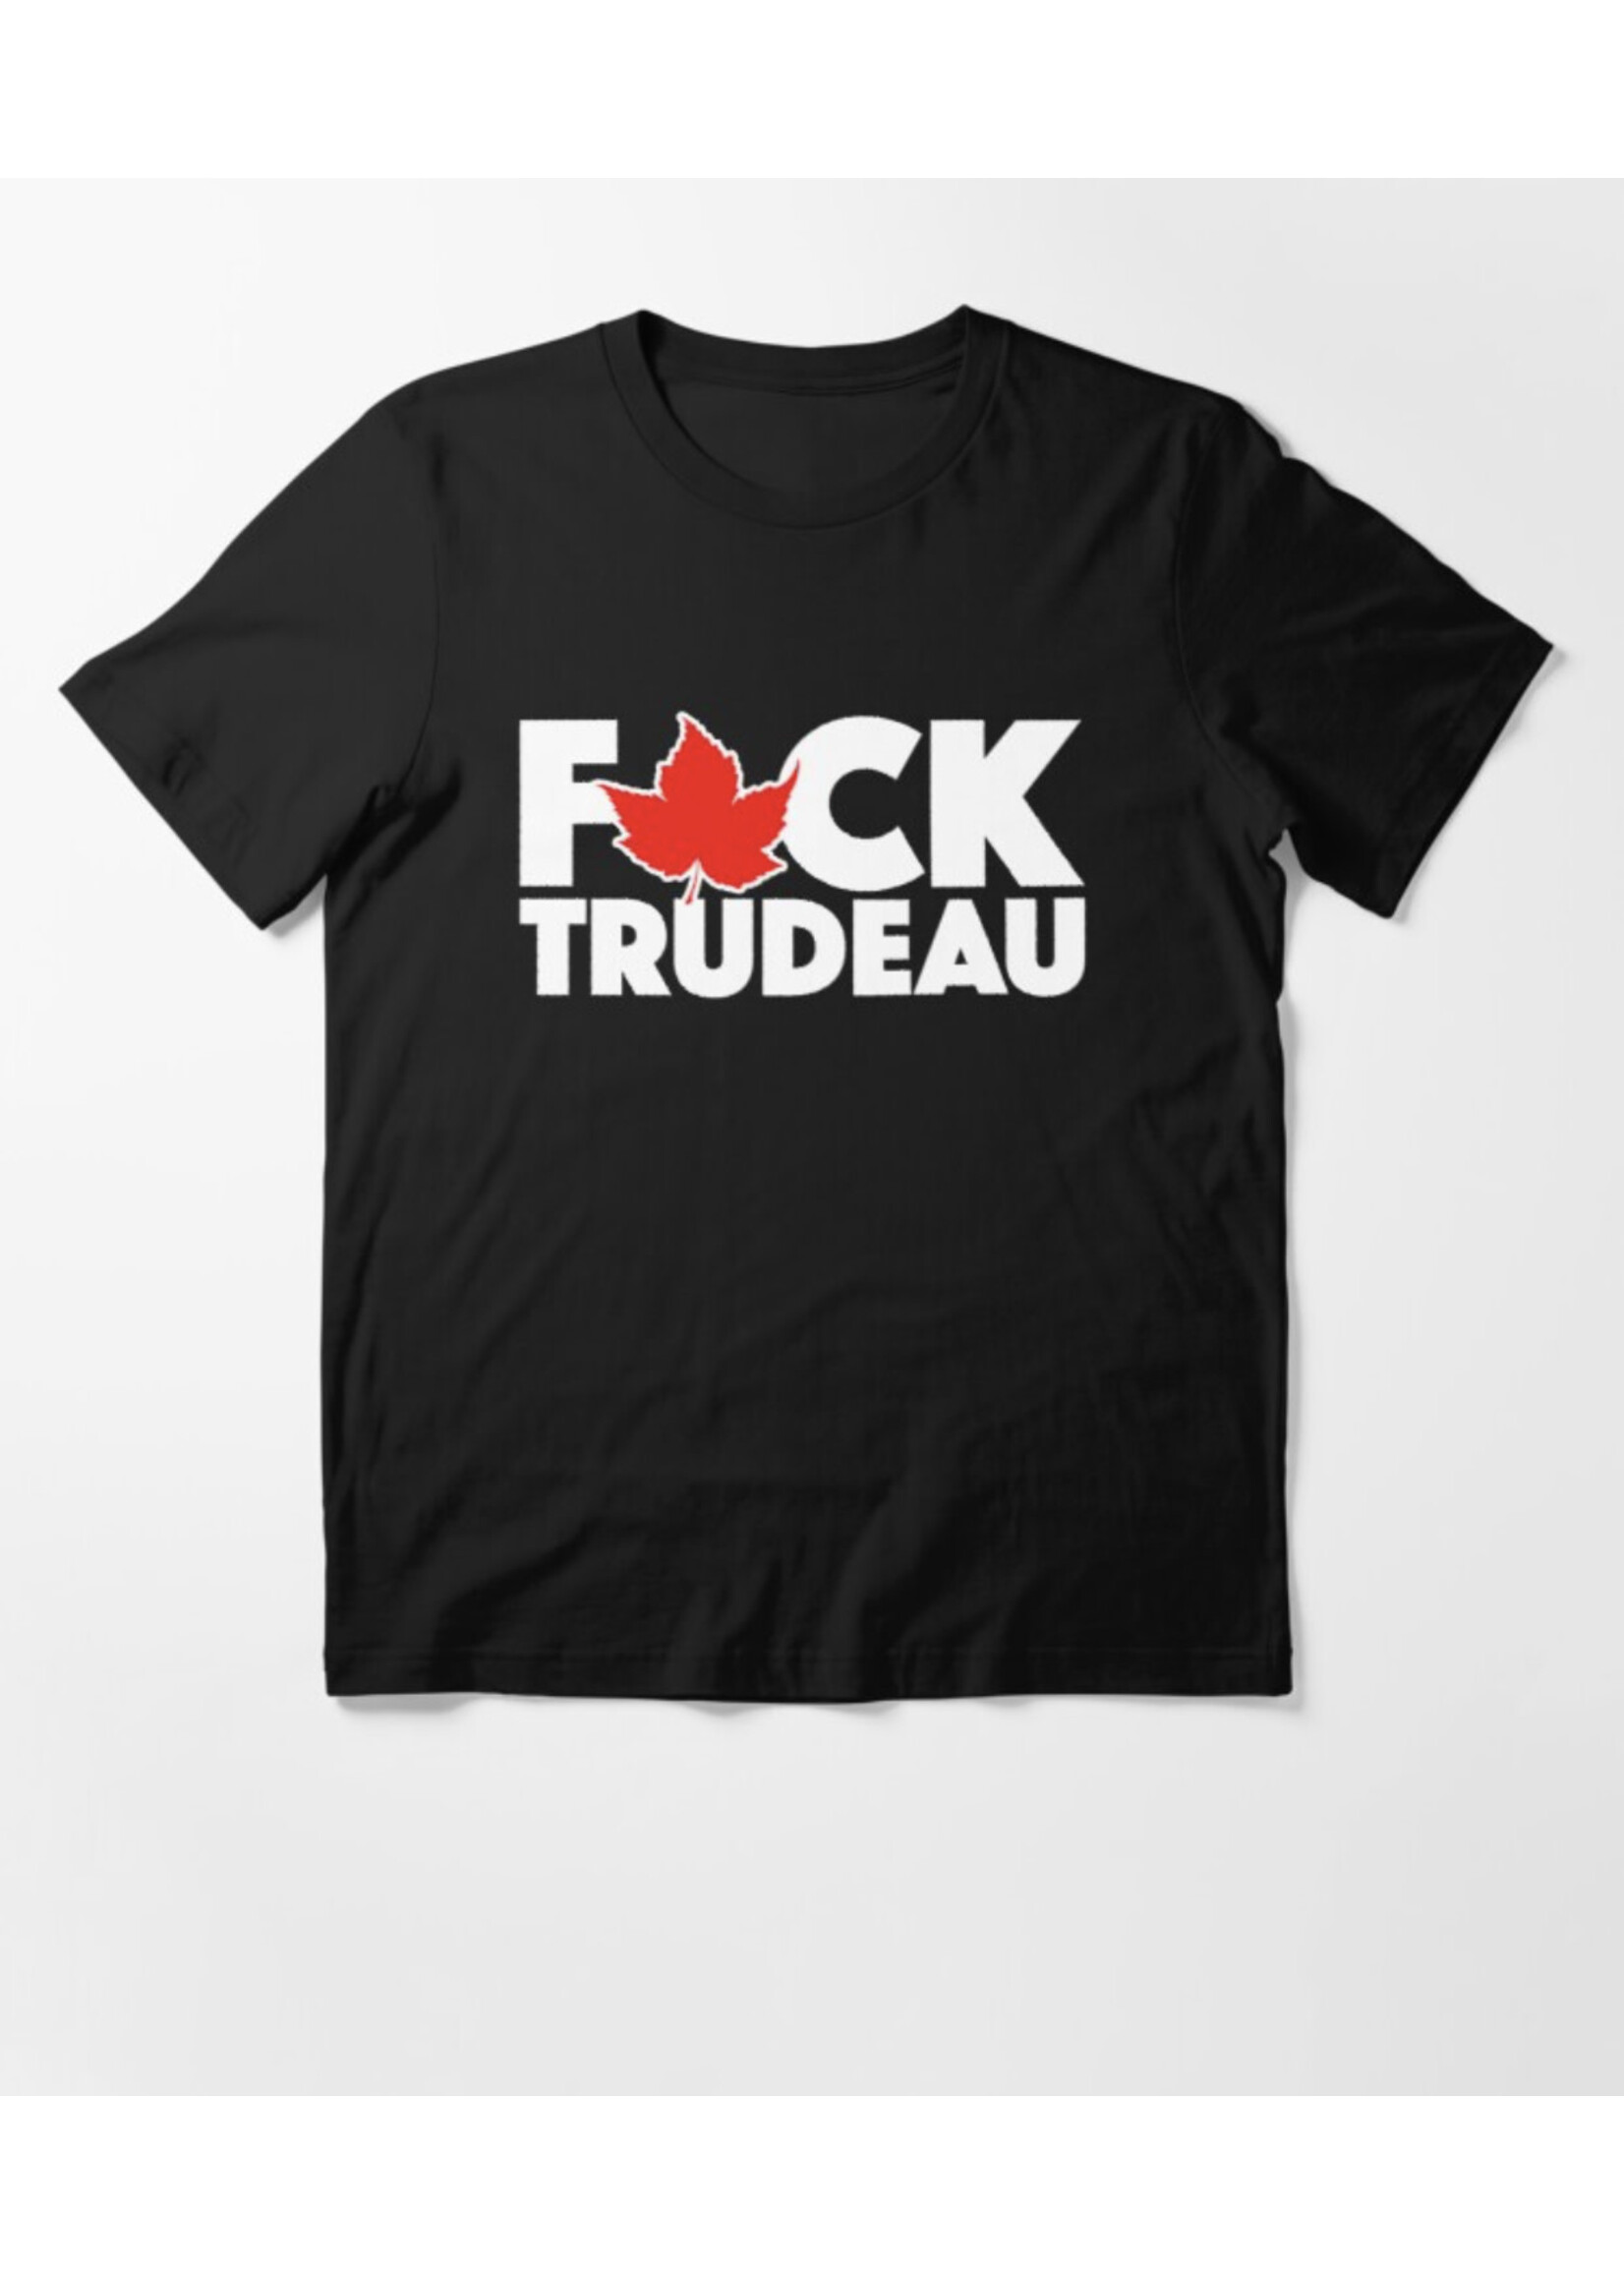 F@ck Trudeau Shirt